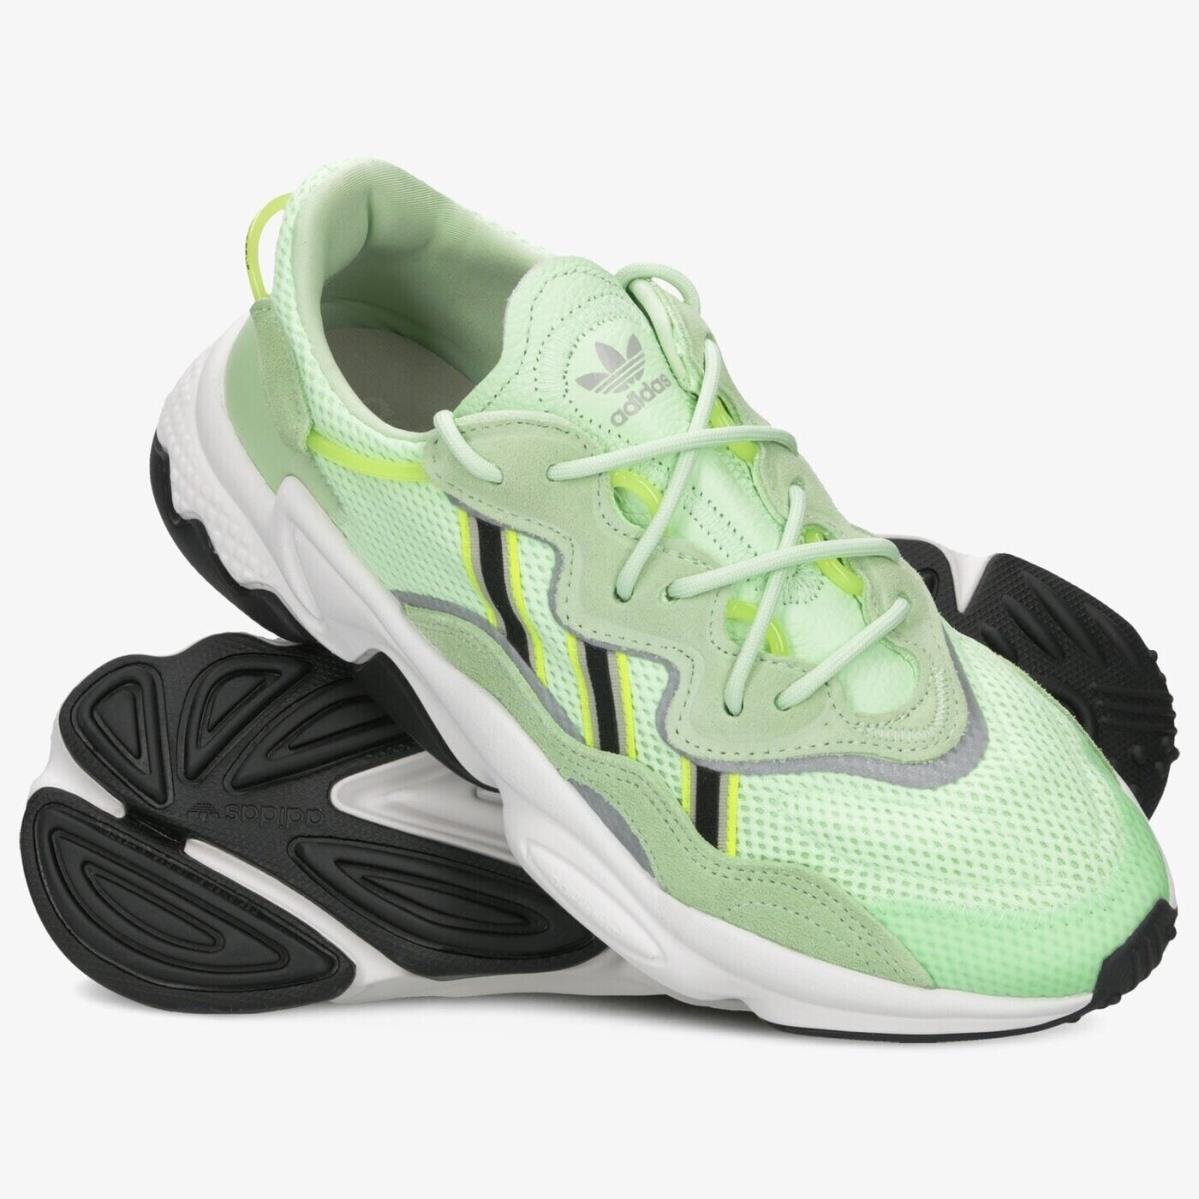 Adidas shoes Ozweego - Green 5